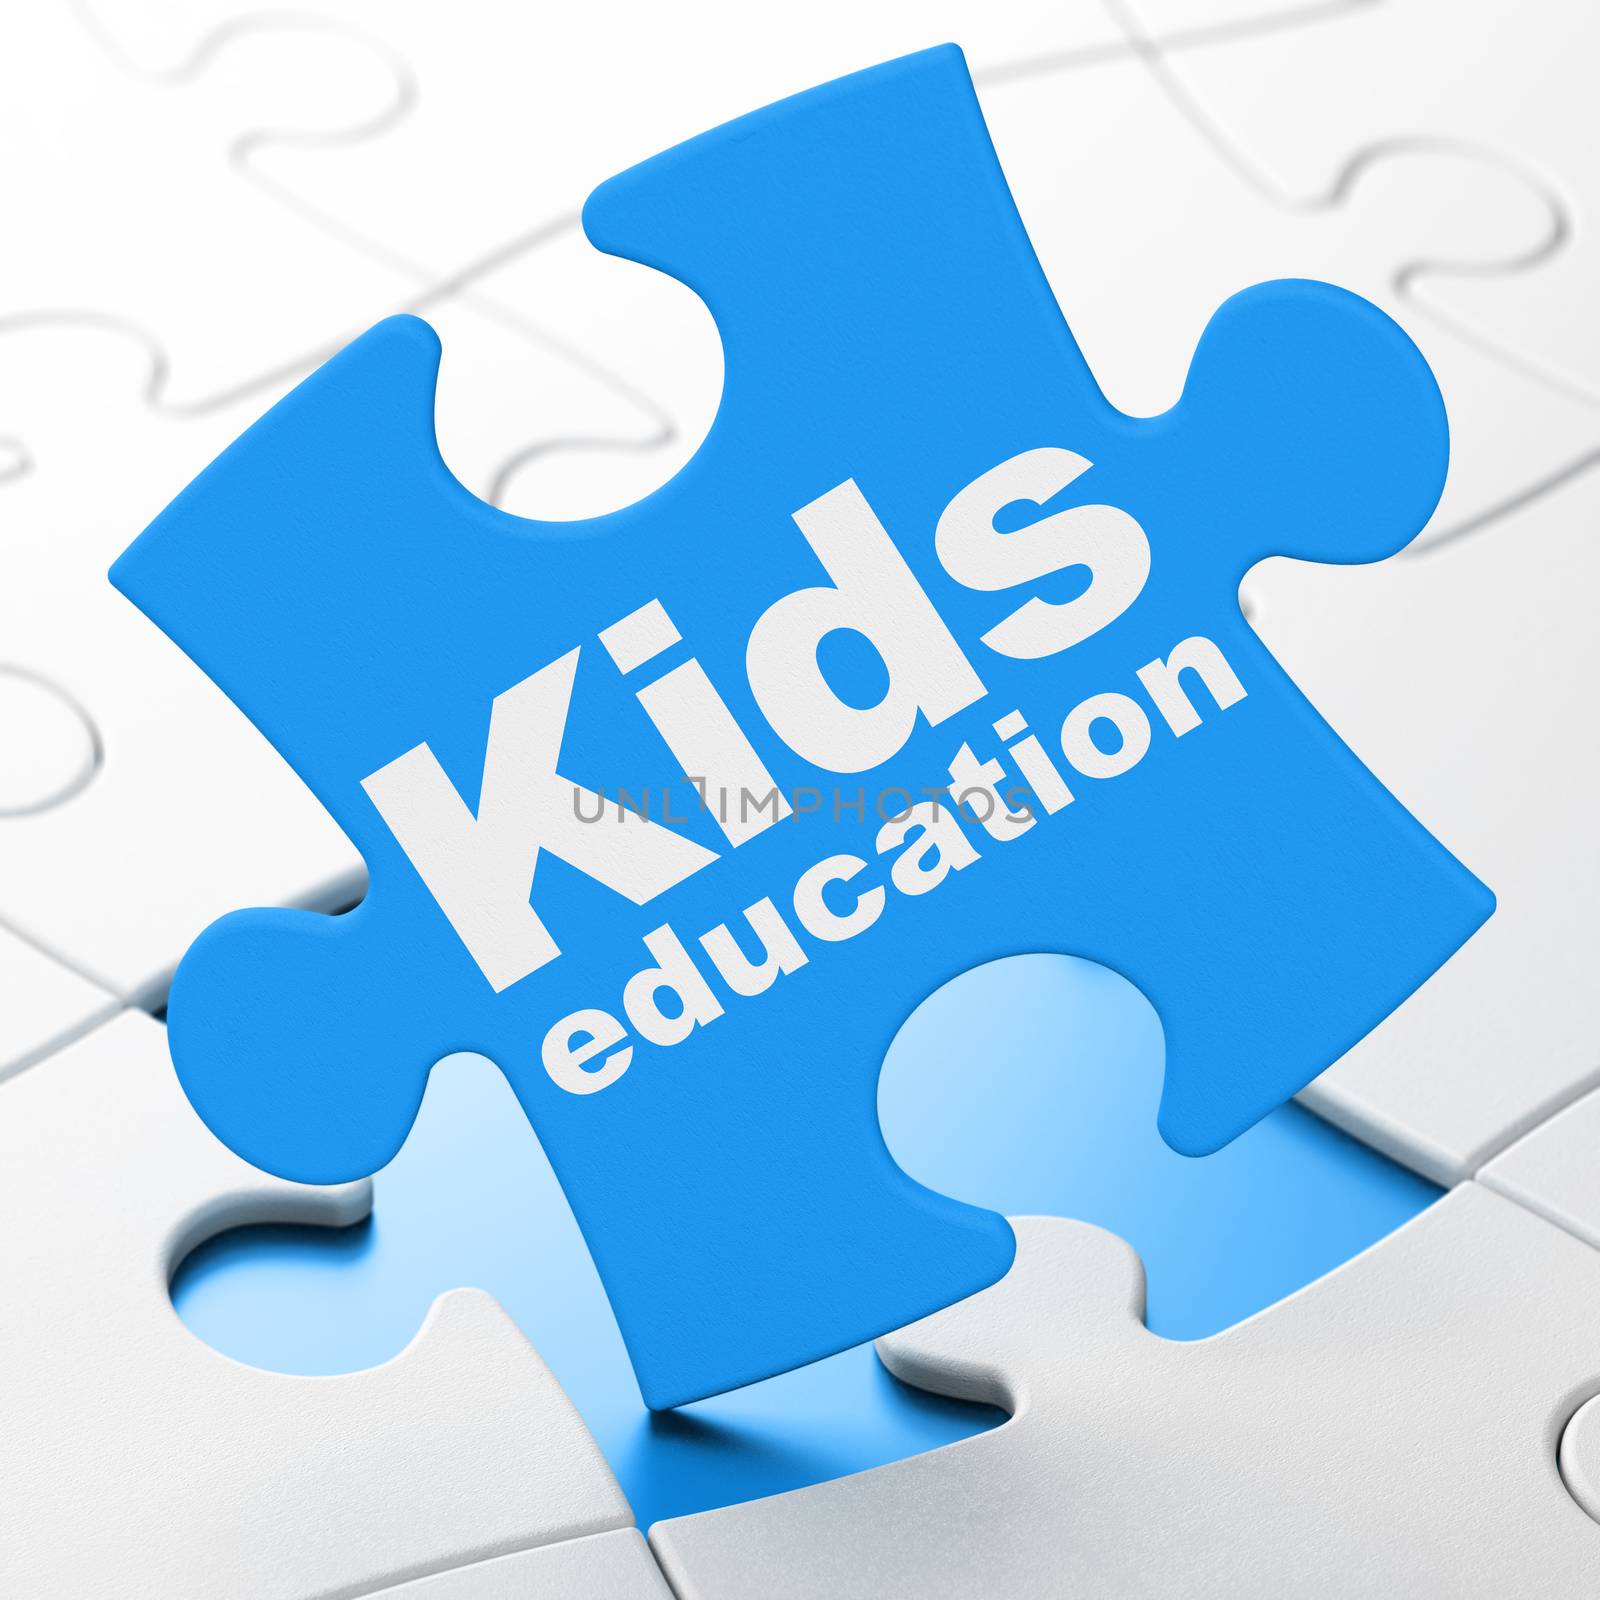 Education concept: Kids Education on puzzle background by maxkabakov